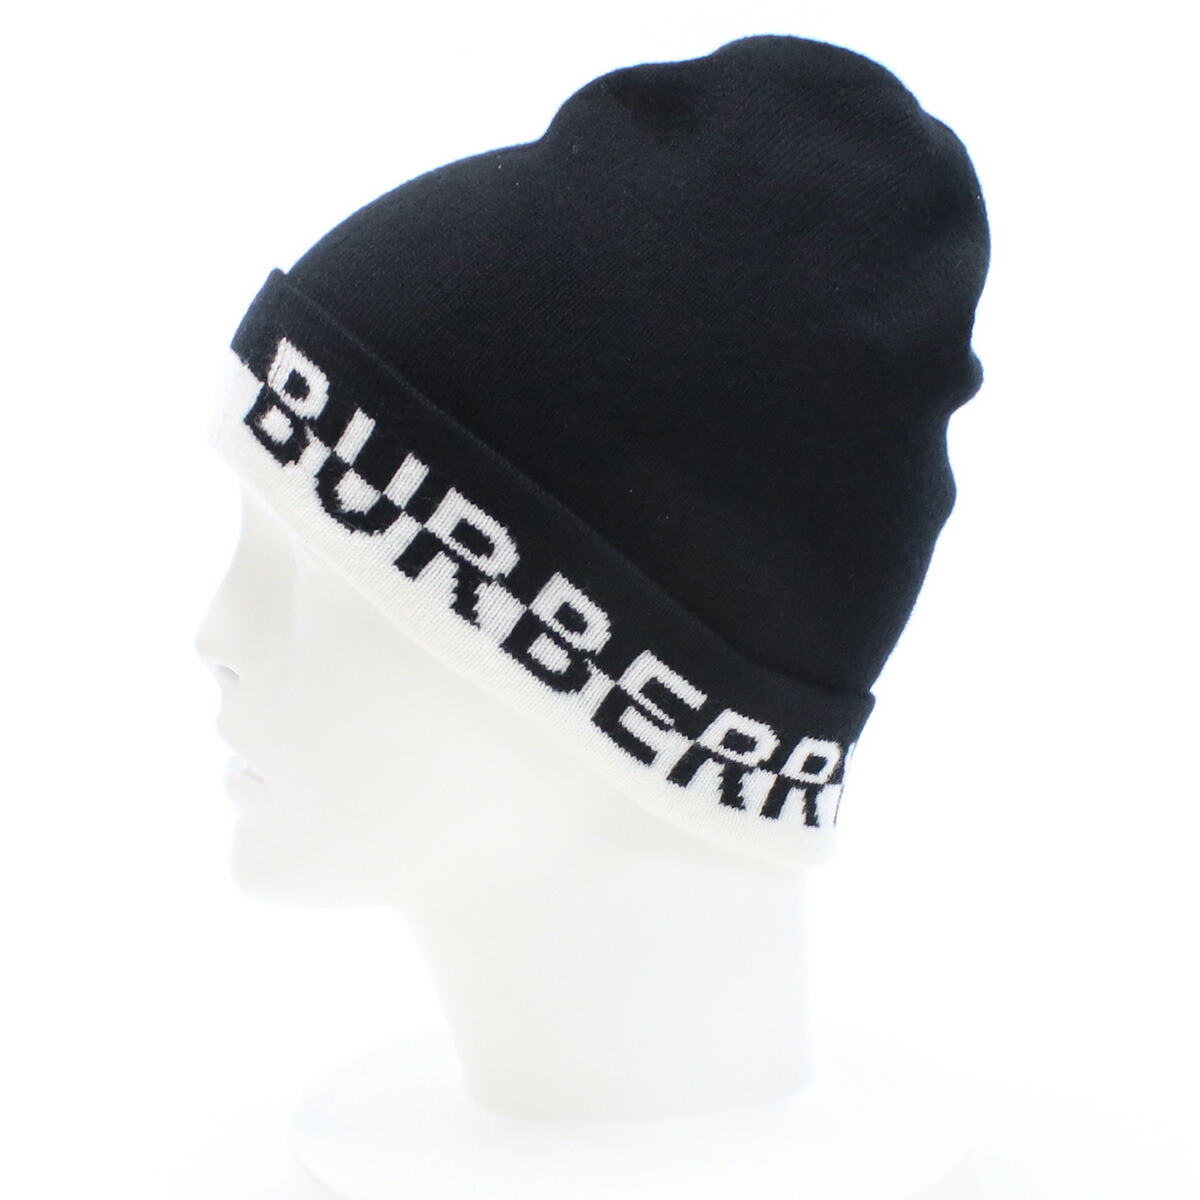 Armerie Boutique バーバリー BURBERRY メンズ－ニット帽 ブランド ロゴ入り 8058054 A1189  BLACK-WHITE ブラック cap-01 warm-02